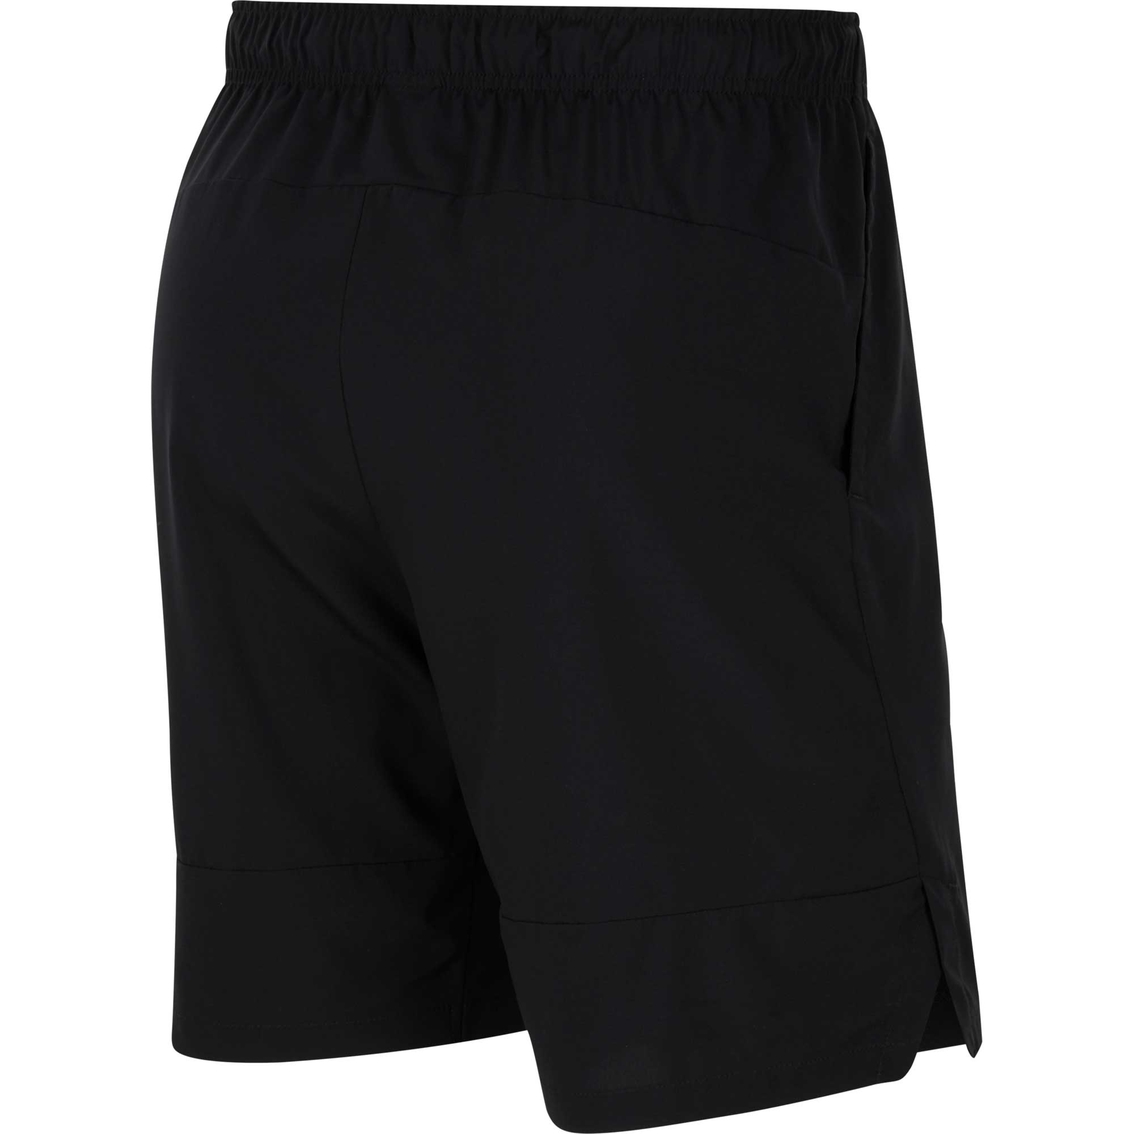 Nike Dri Fit Flex Woven Shorts | Shorts | Clothing & Accessories | Shop ...